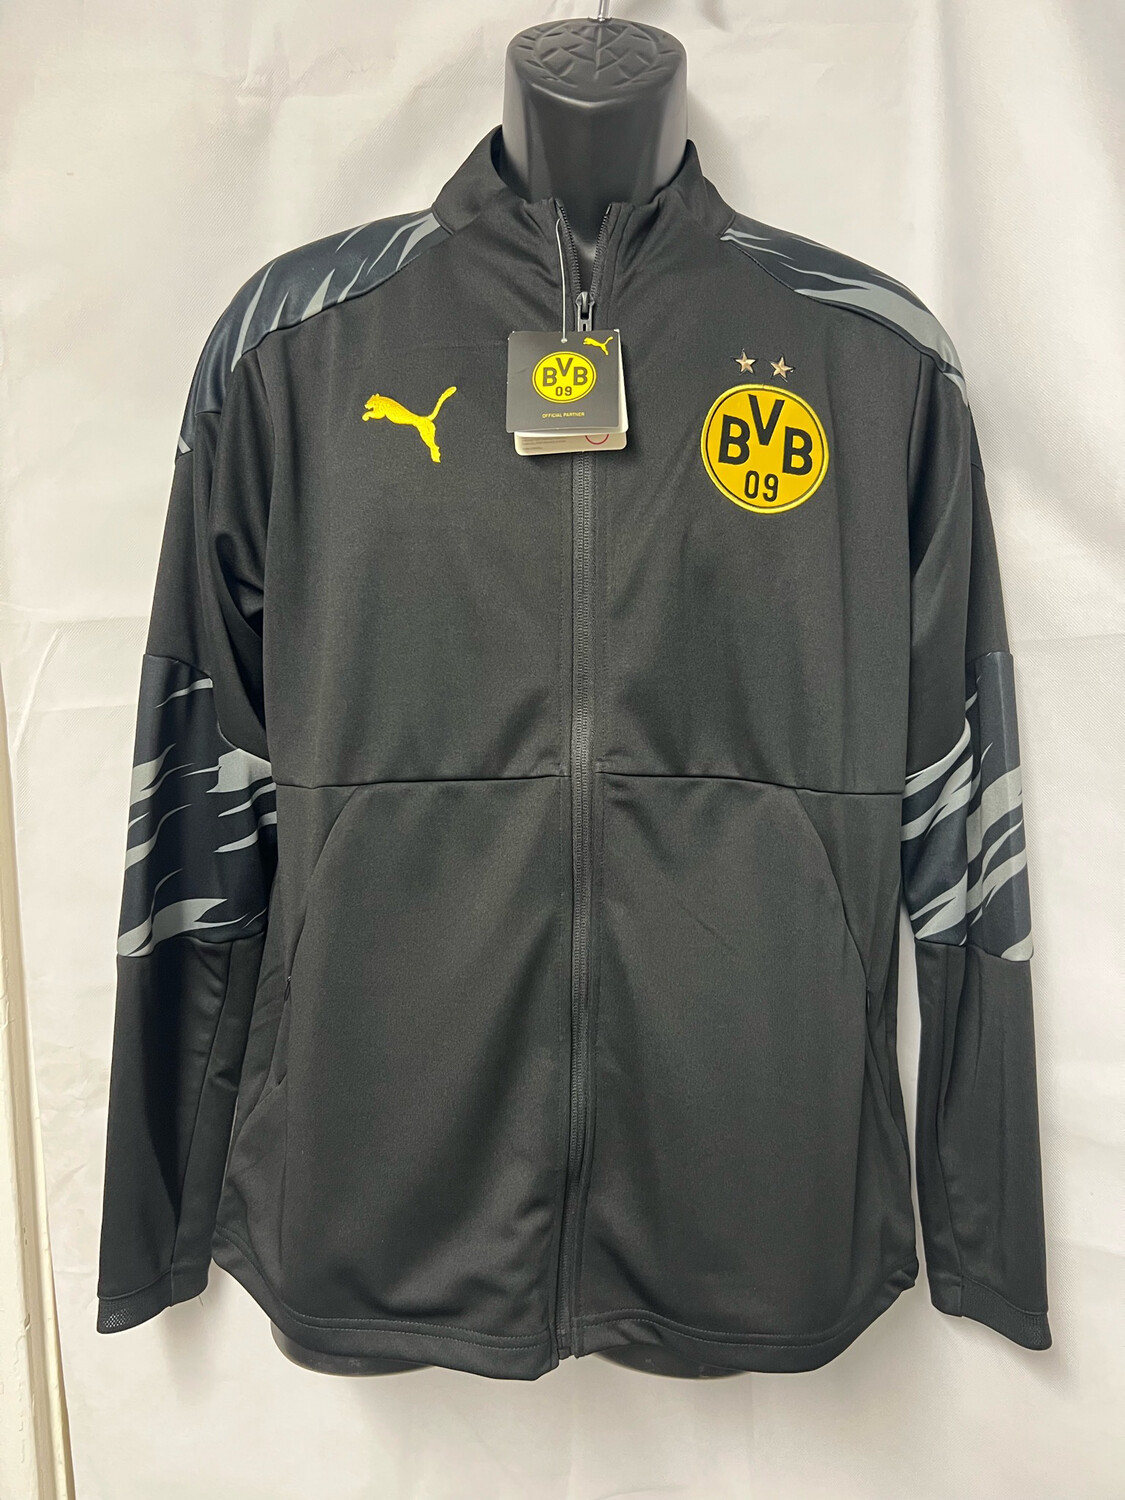 22/23 BVB Borussia Dortmund pre match jacket